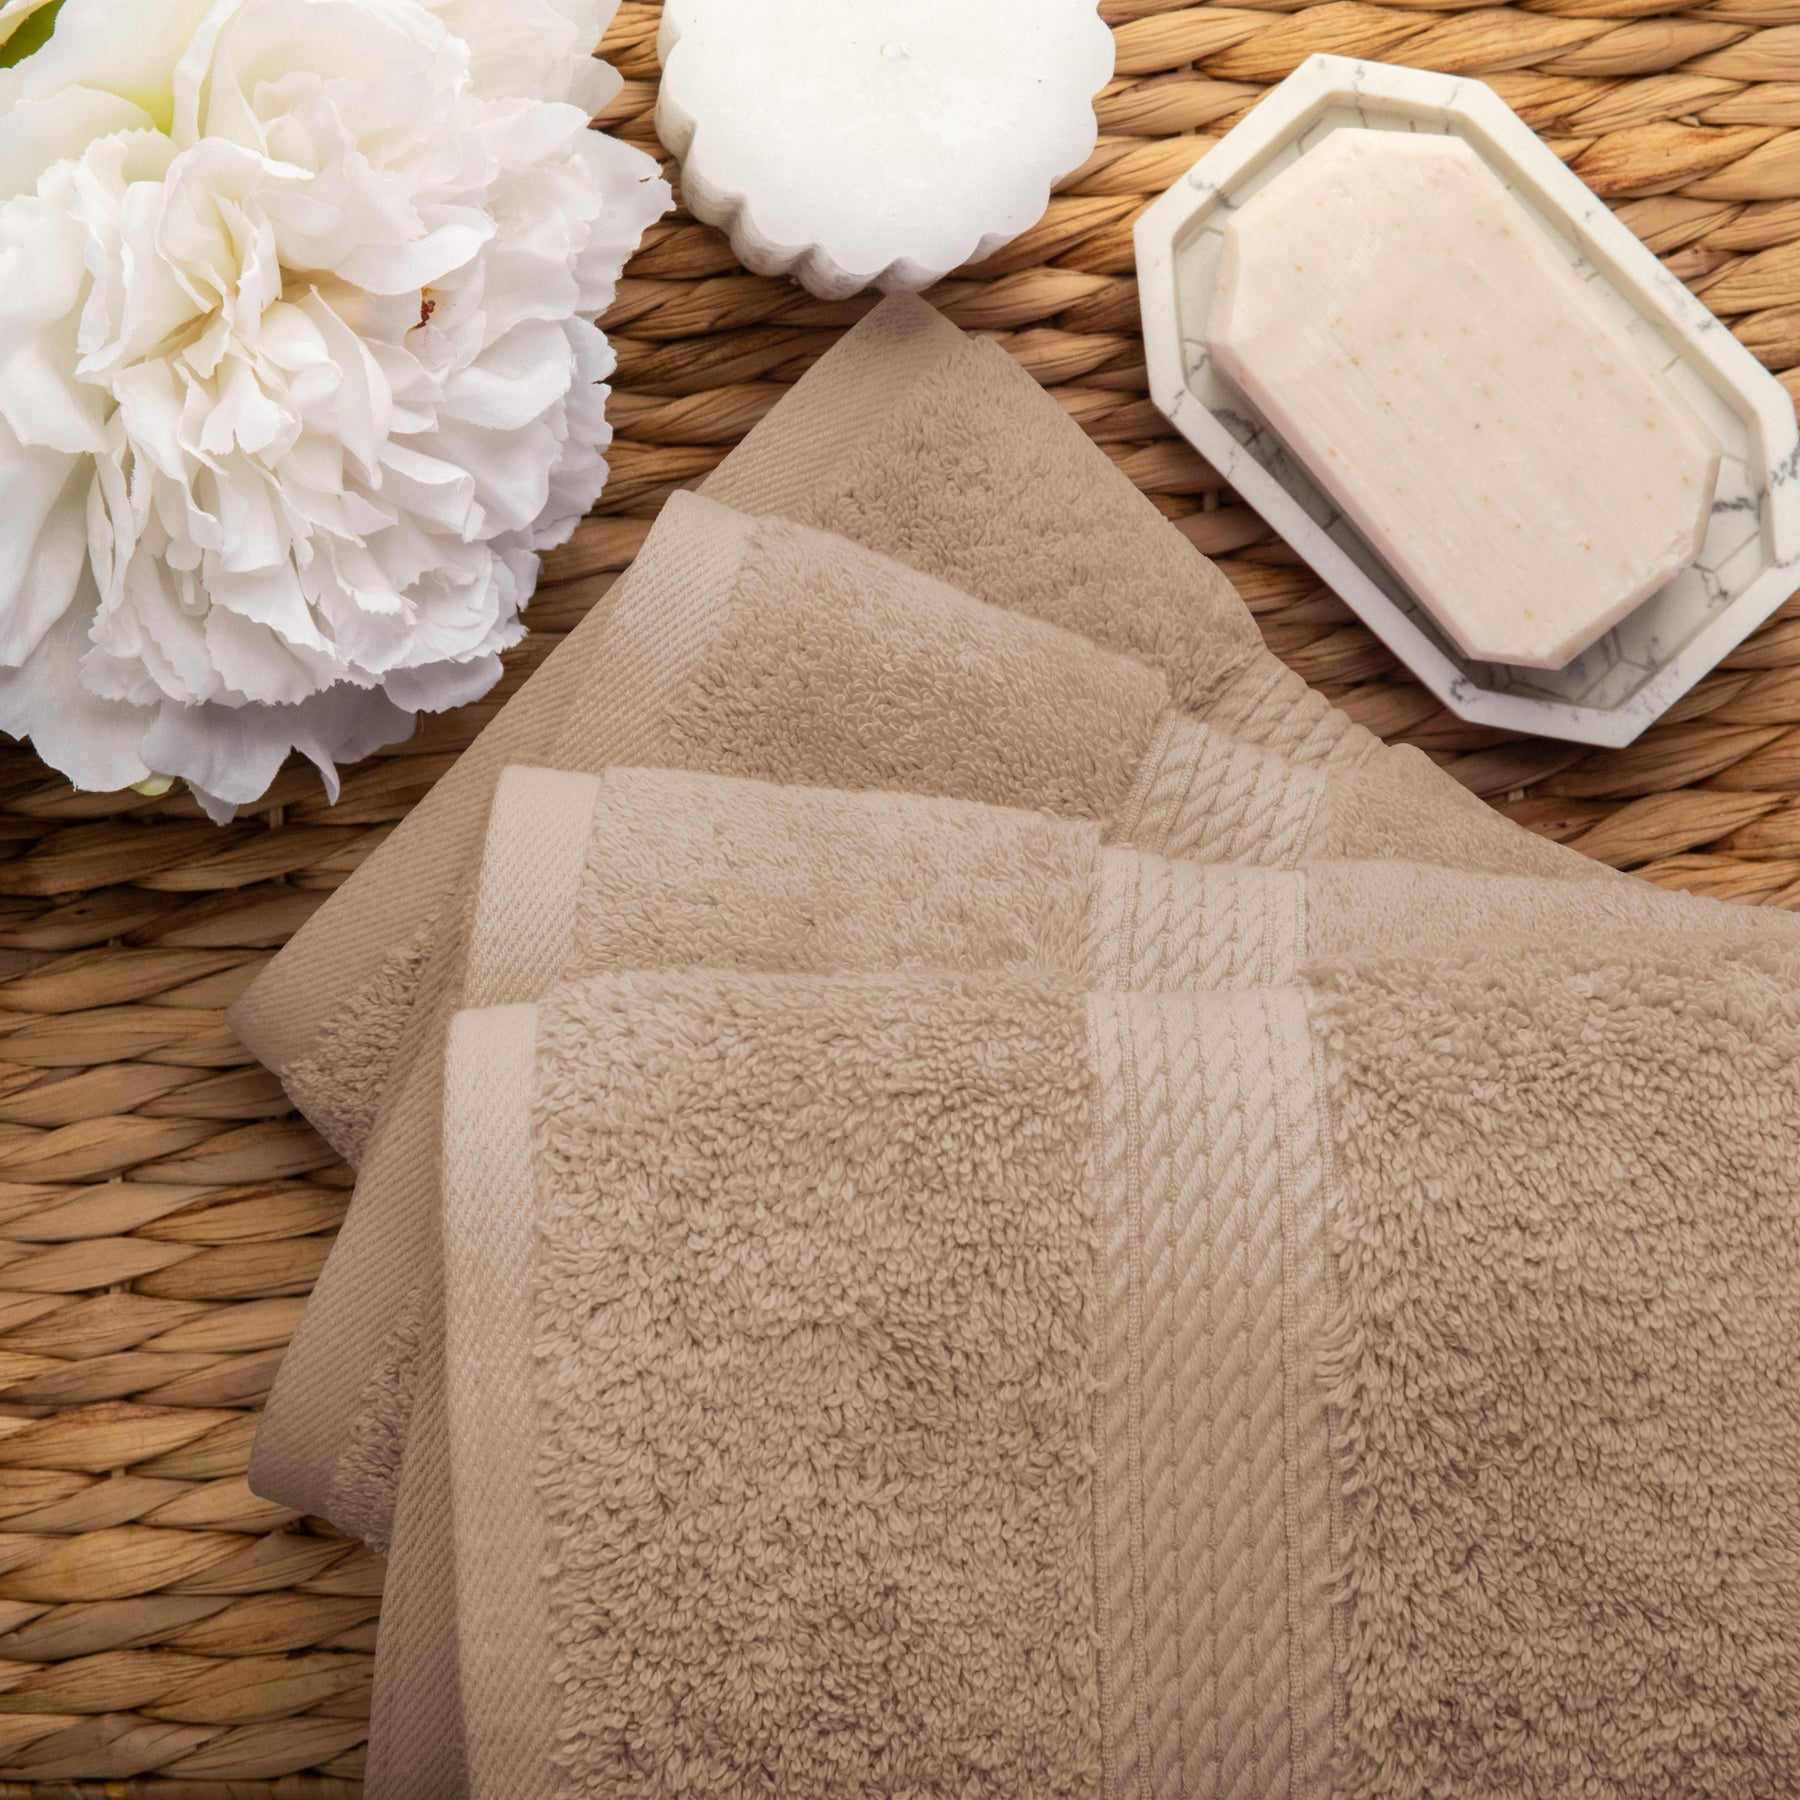 Solid Egyptian Cotton 4 Piece Hand Towel Set - Latte